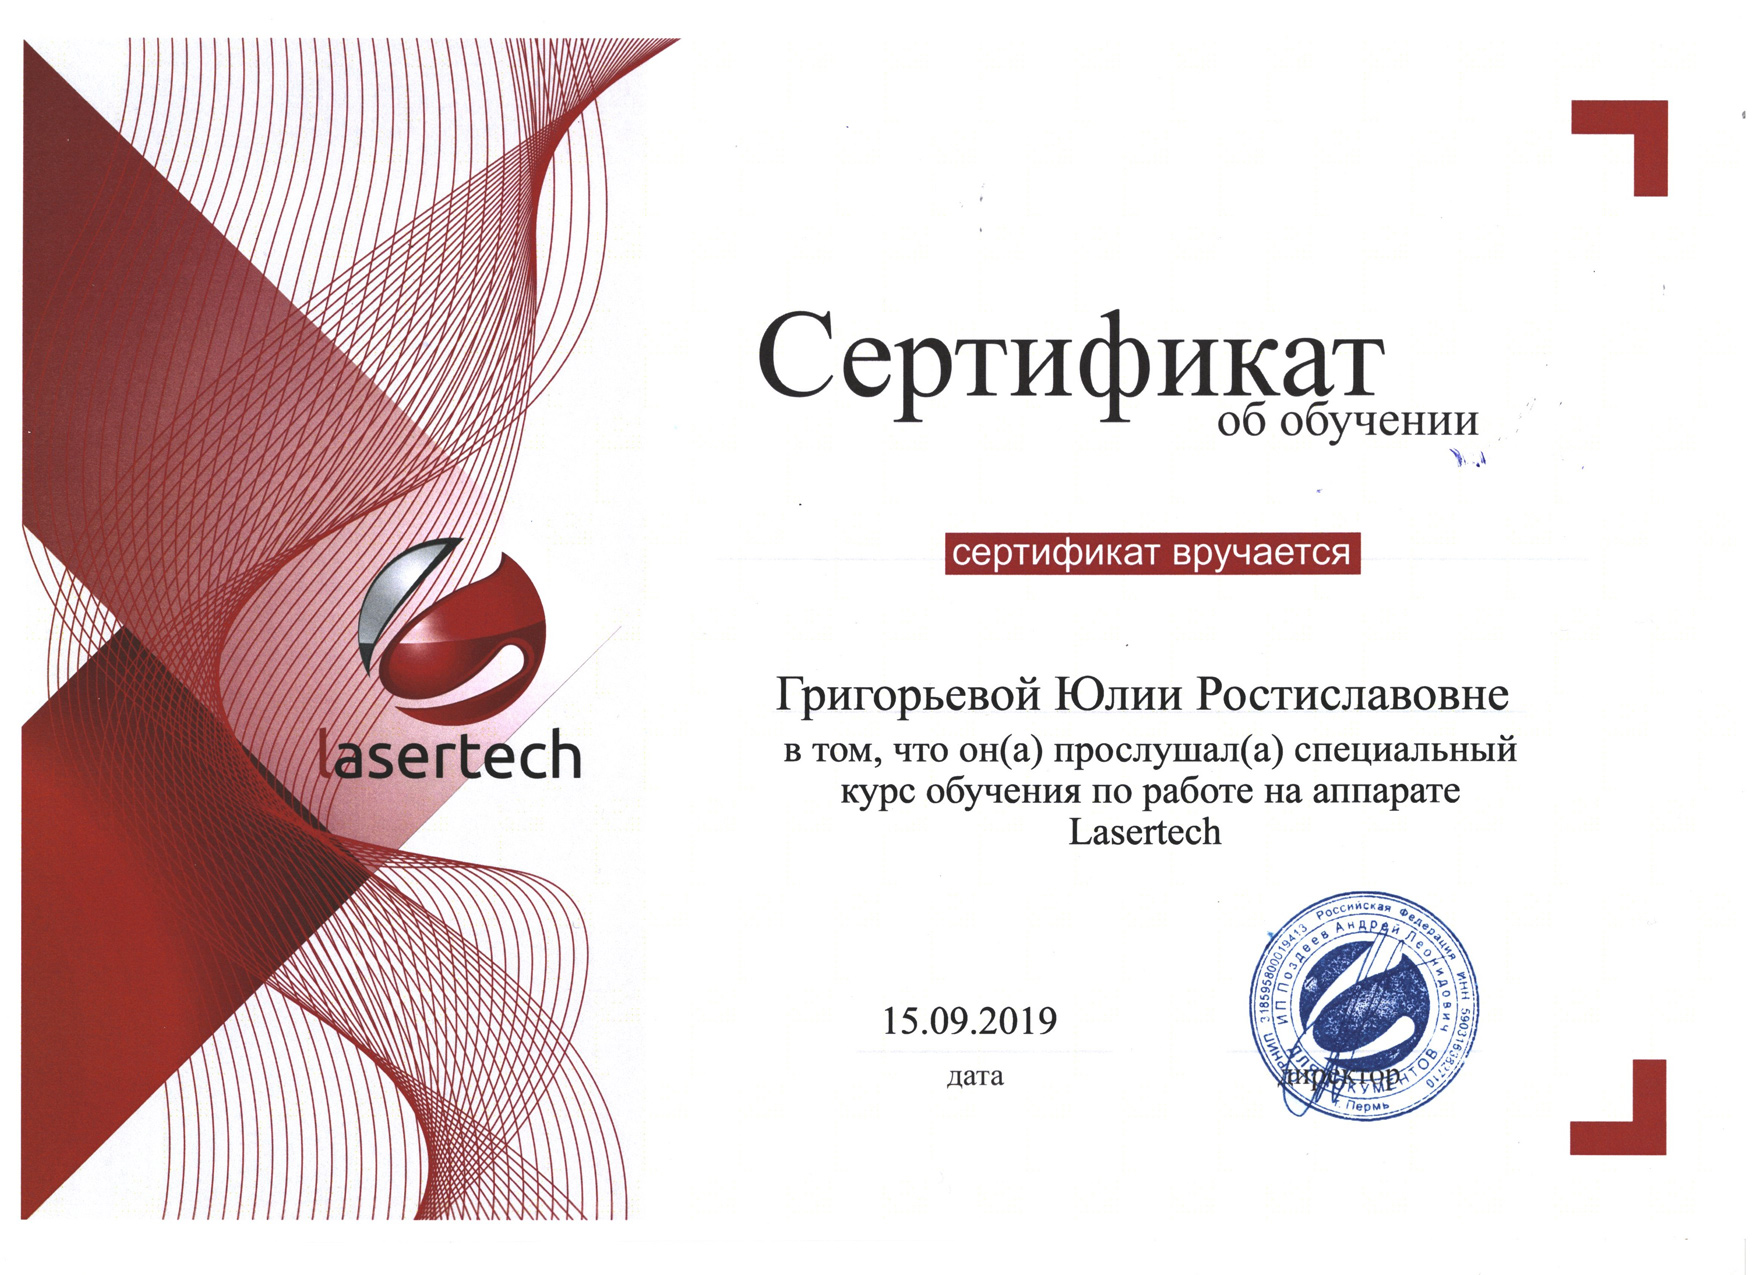 Сертификат — Обучение по работе на аппарате Lasertech. Григорьева Юлия Ростиславовна